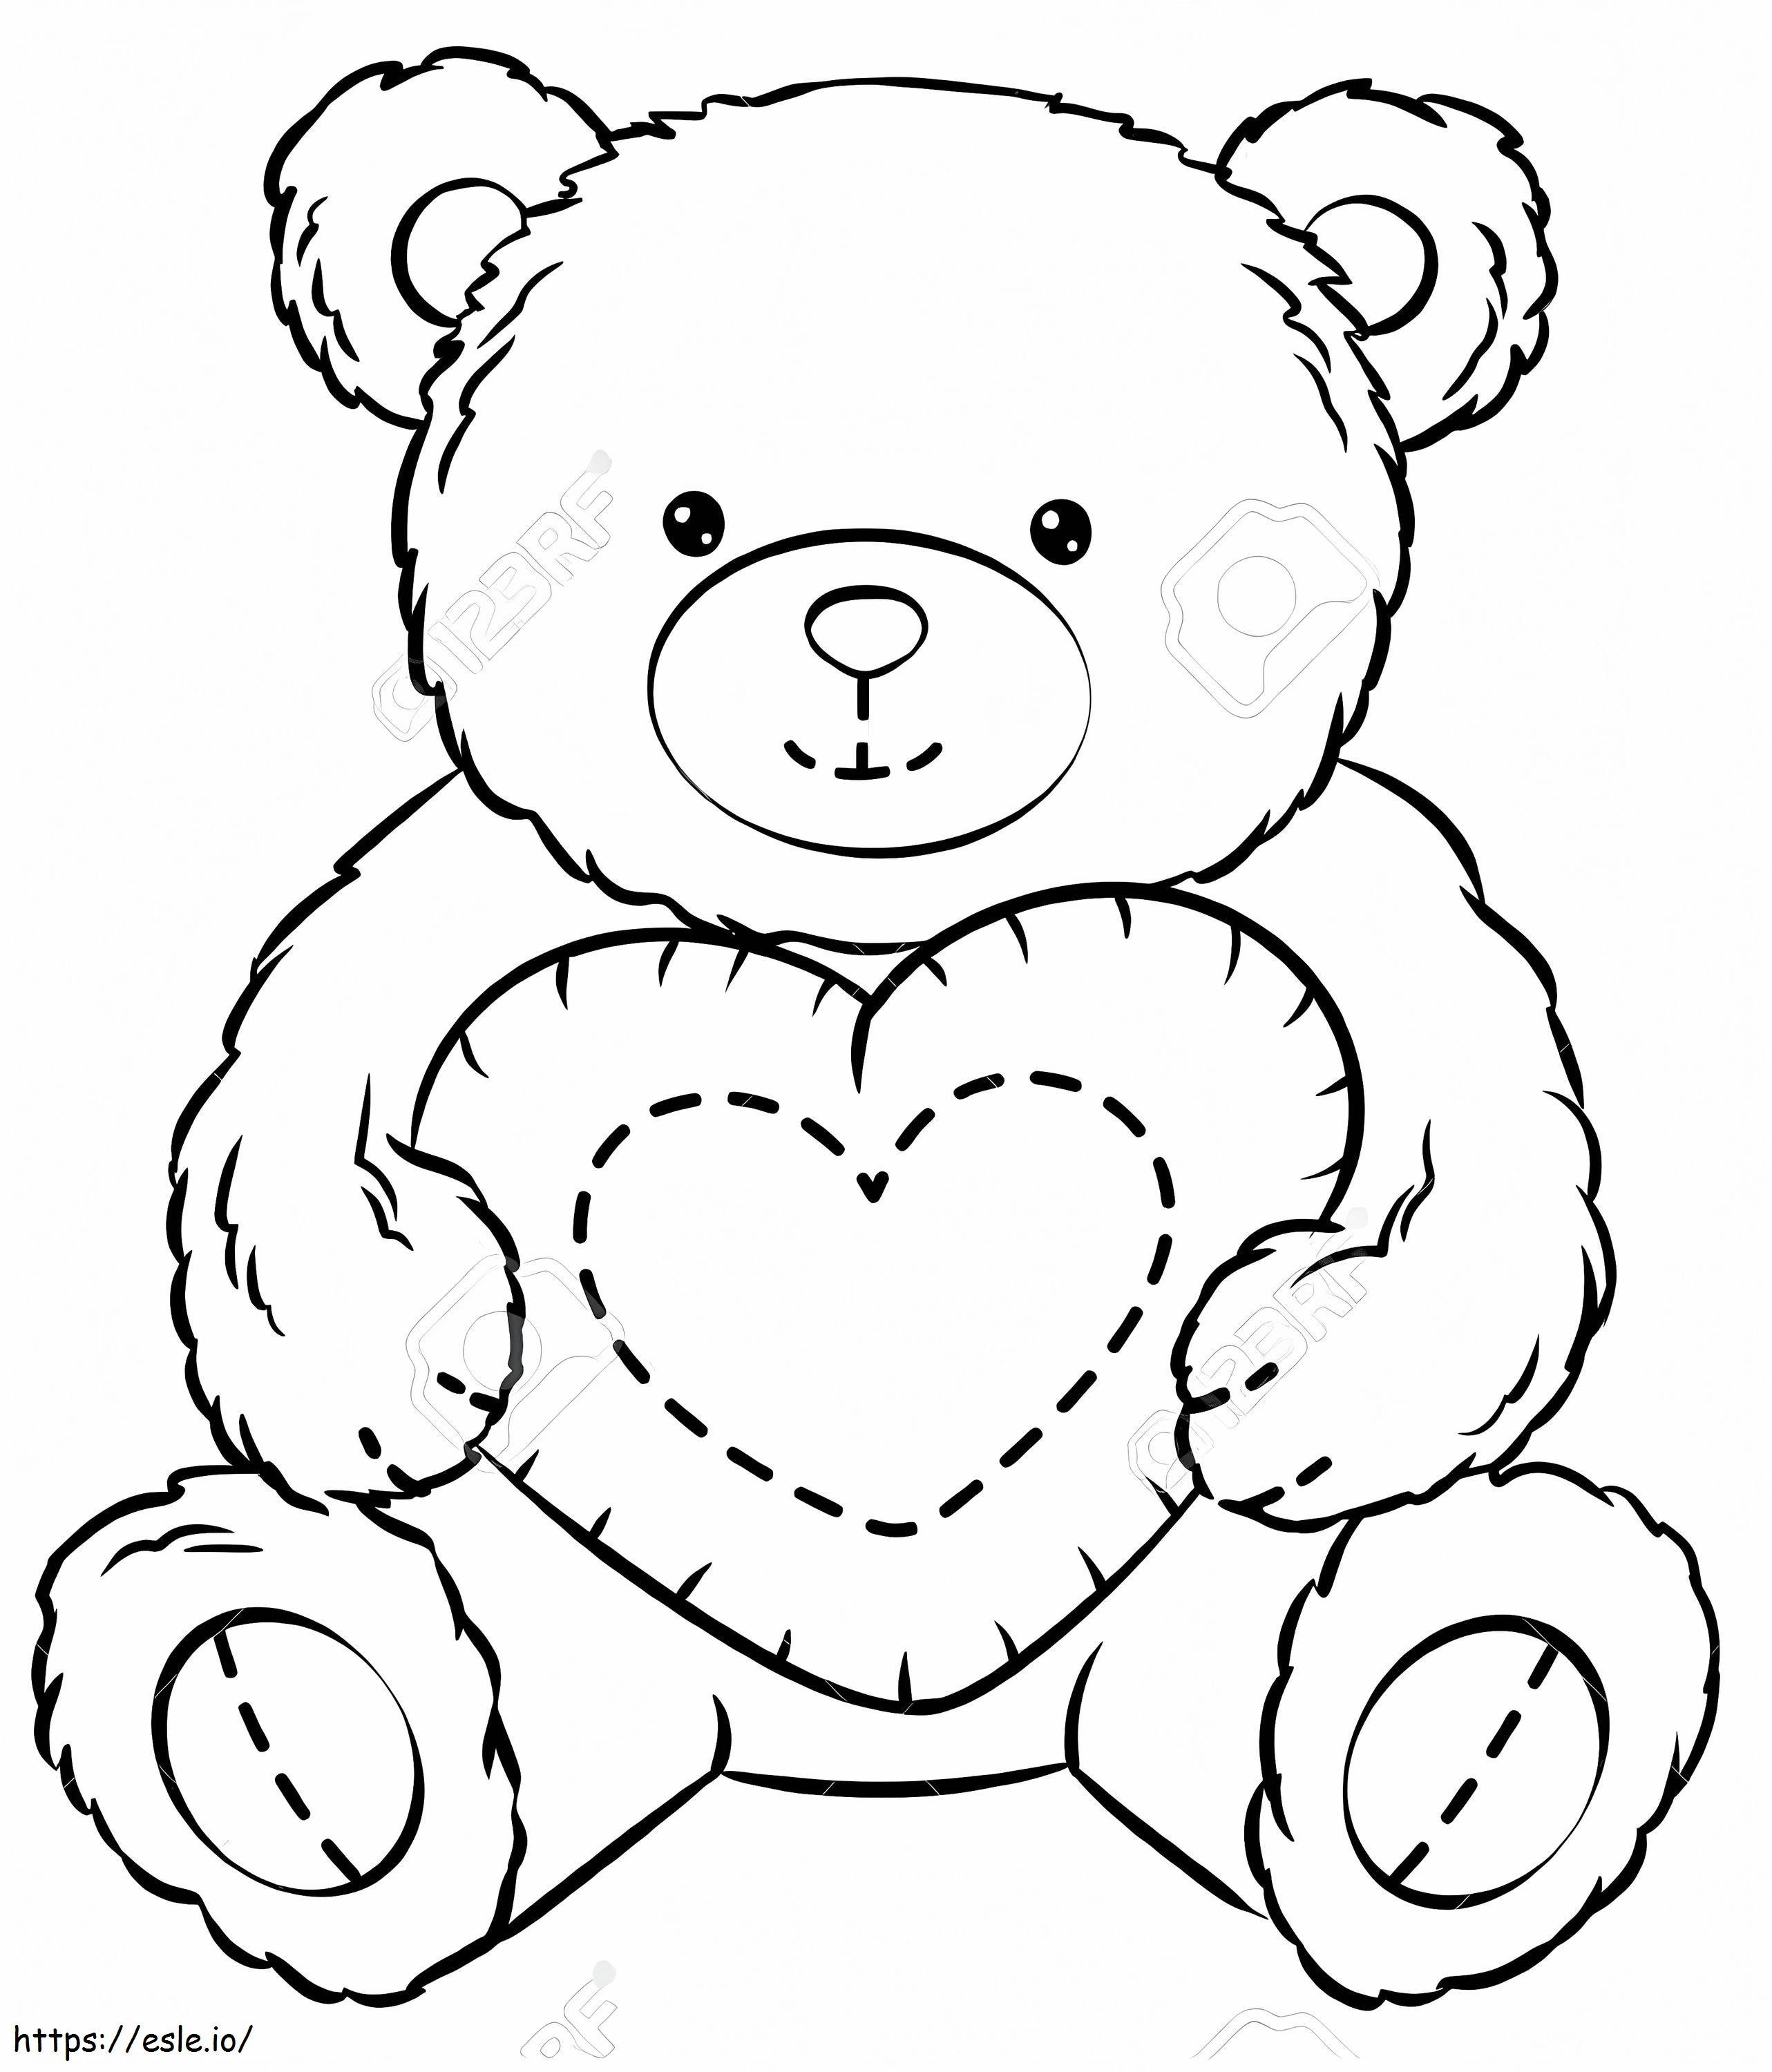 Boneka Beruang Dengan Hati Gambar Mewarnai